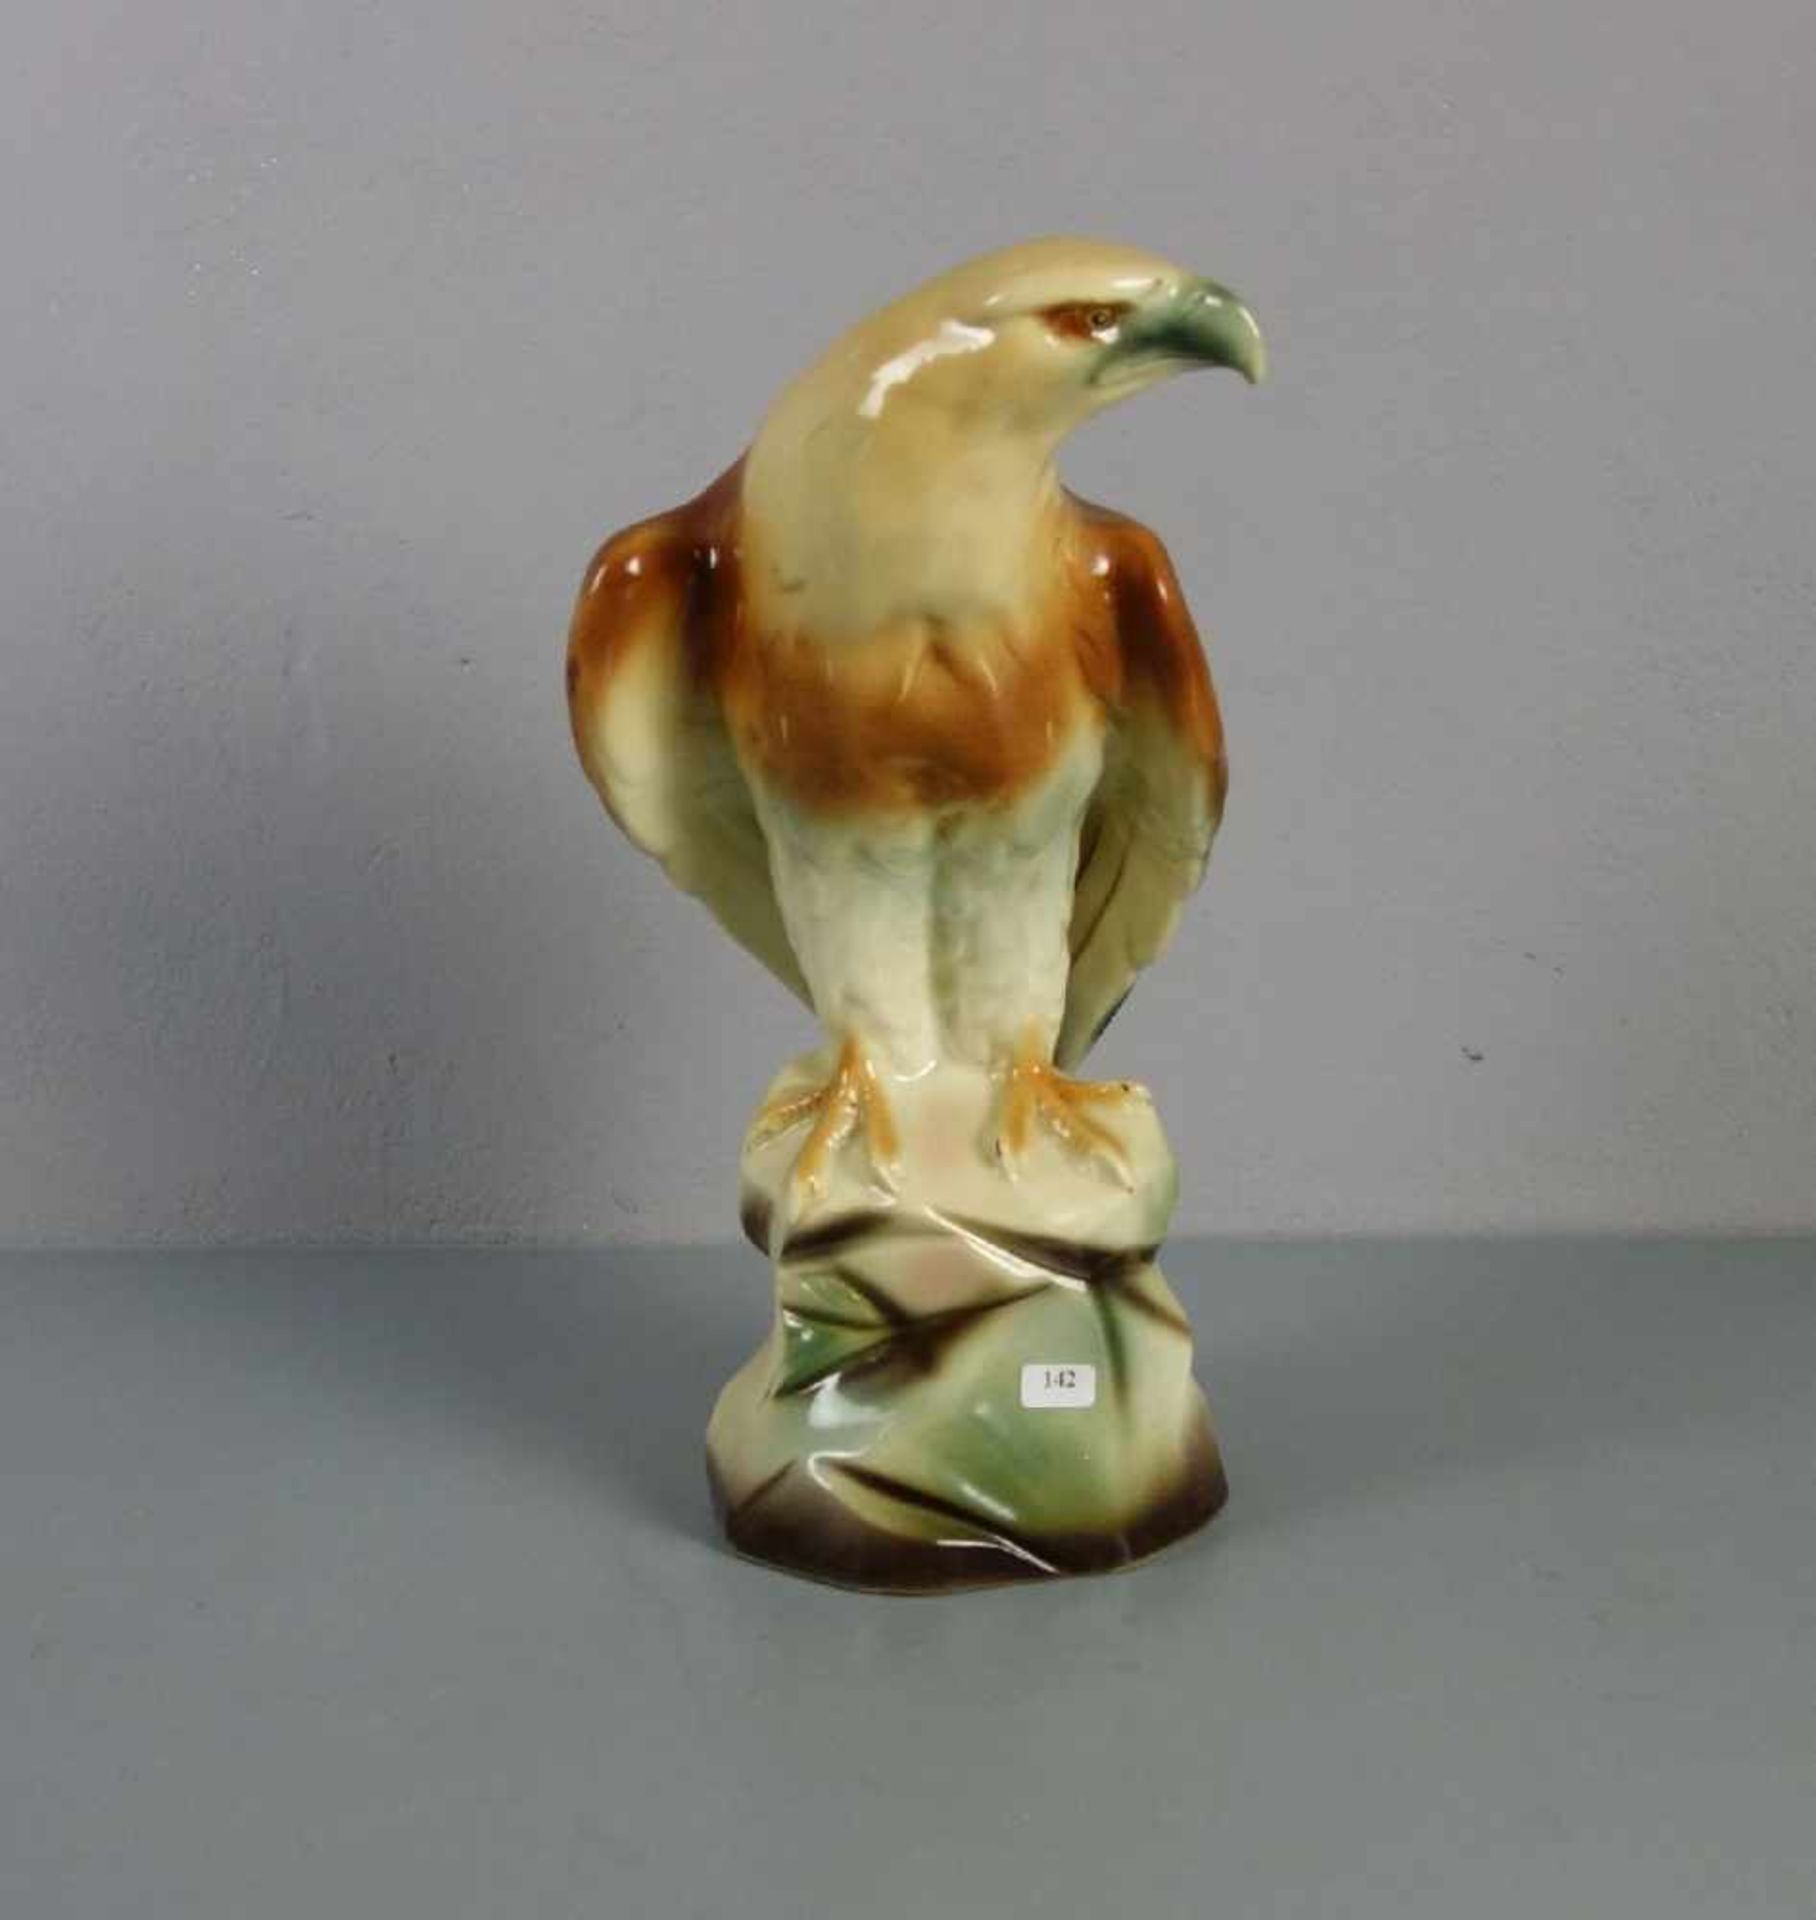 PORZELLANFIGUR / porcelain figure: "Raubvogel / Greifvogel", Weichporzellan, unter dem Stand